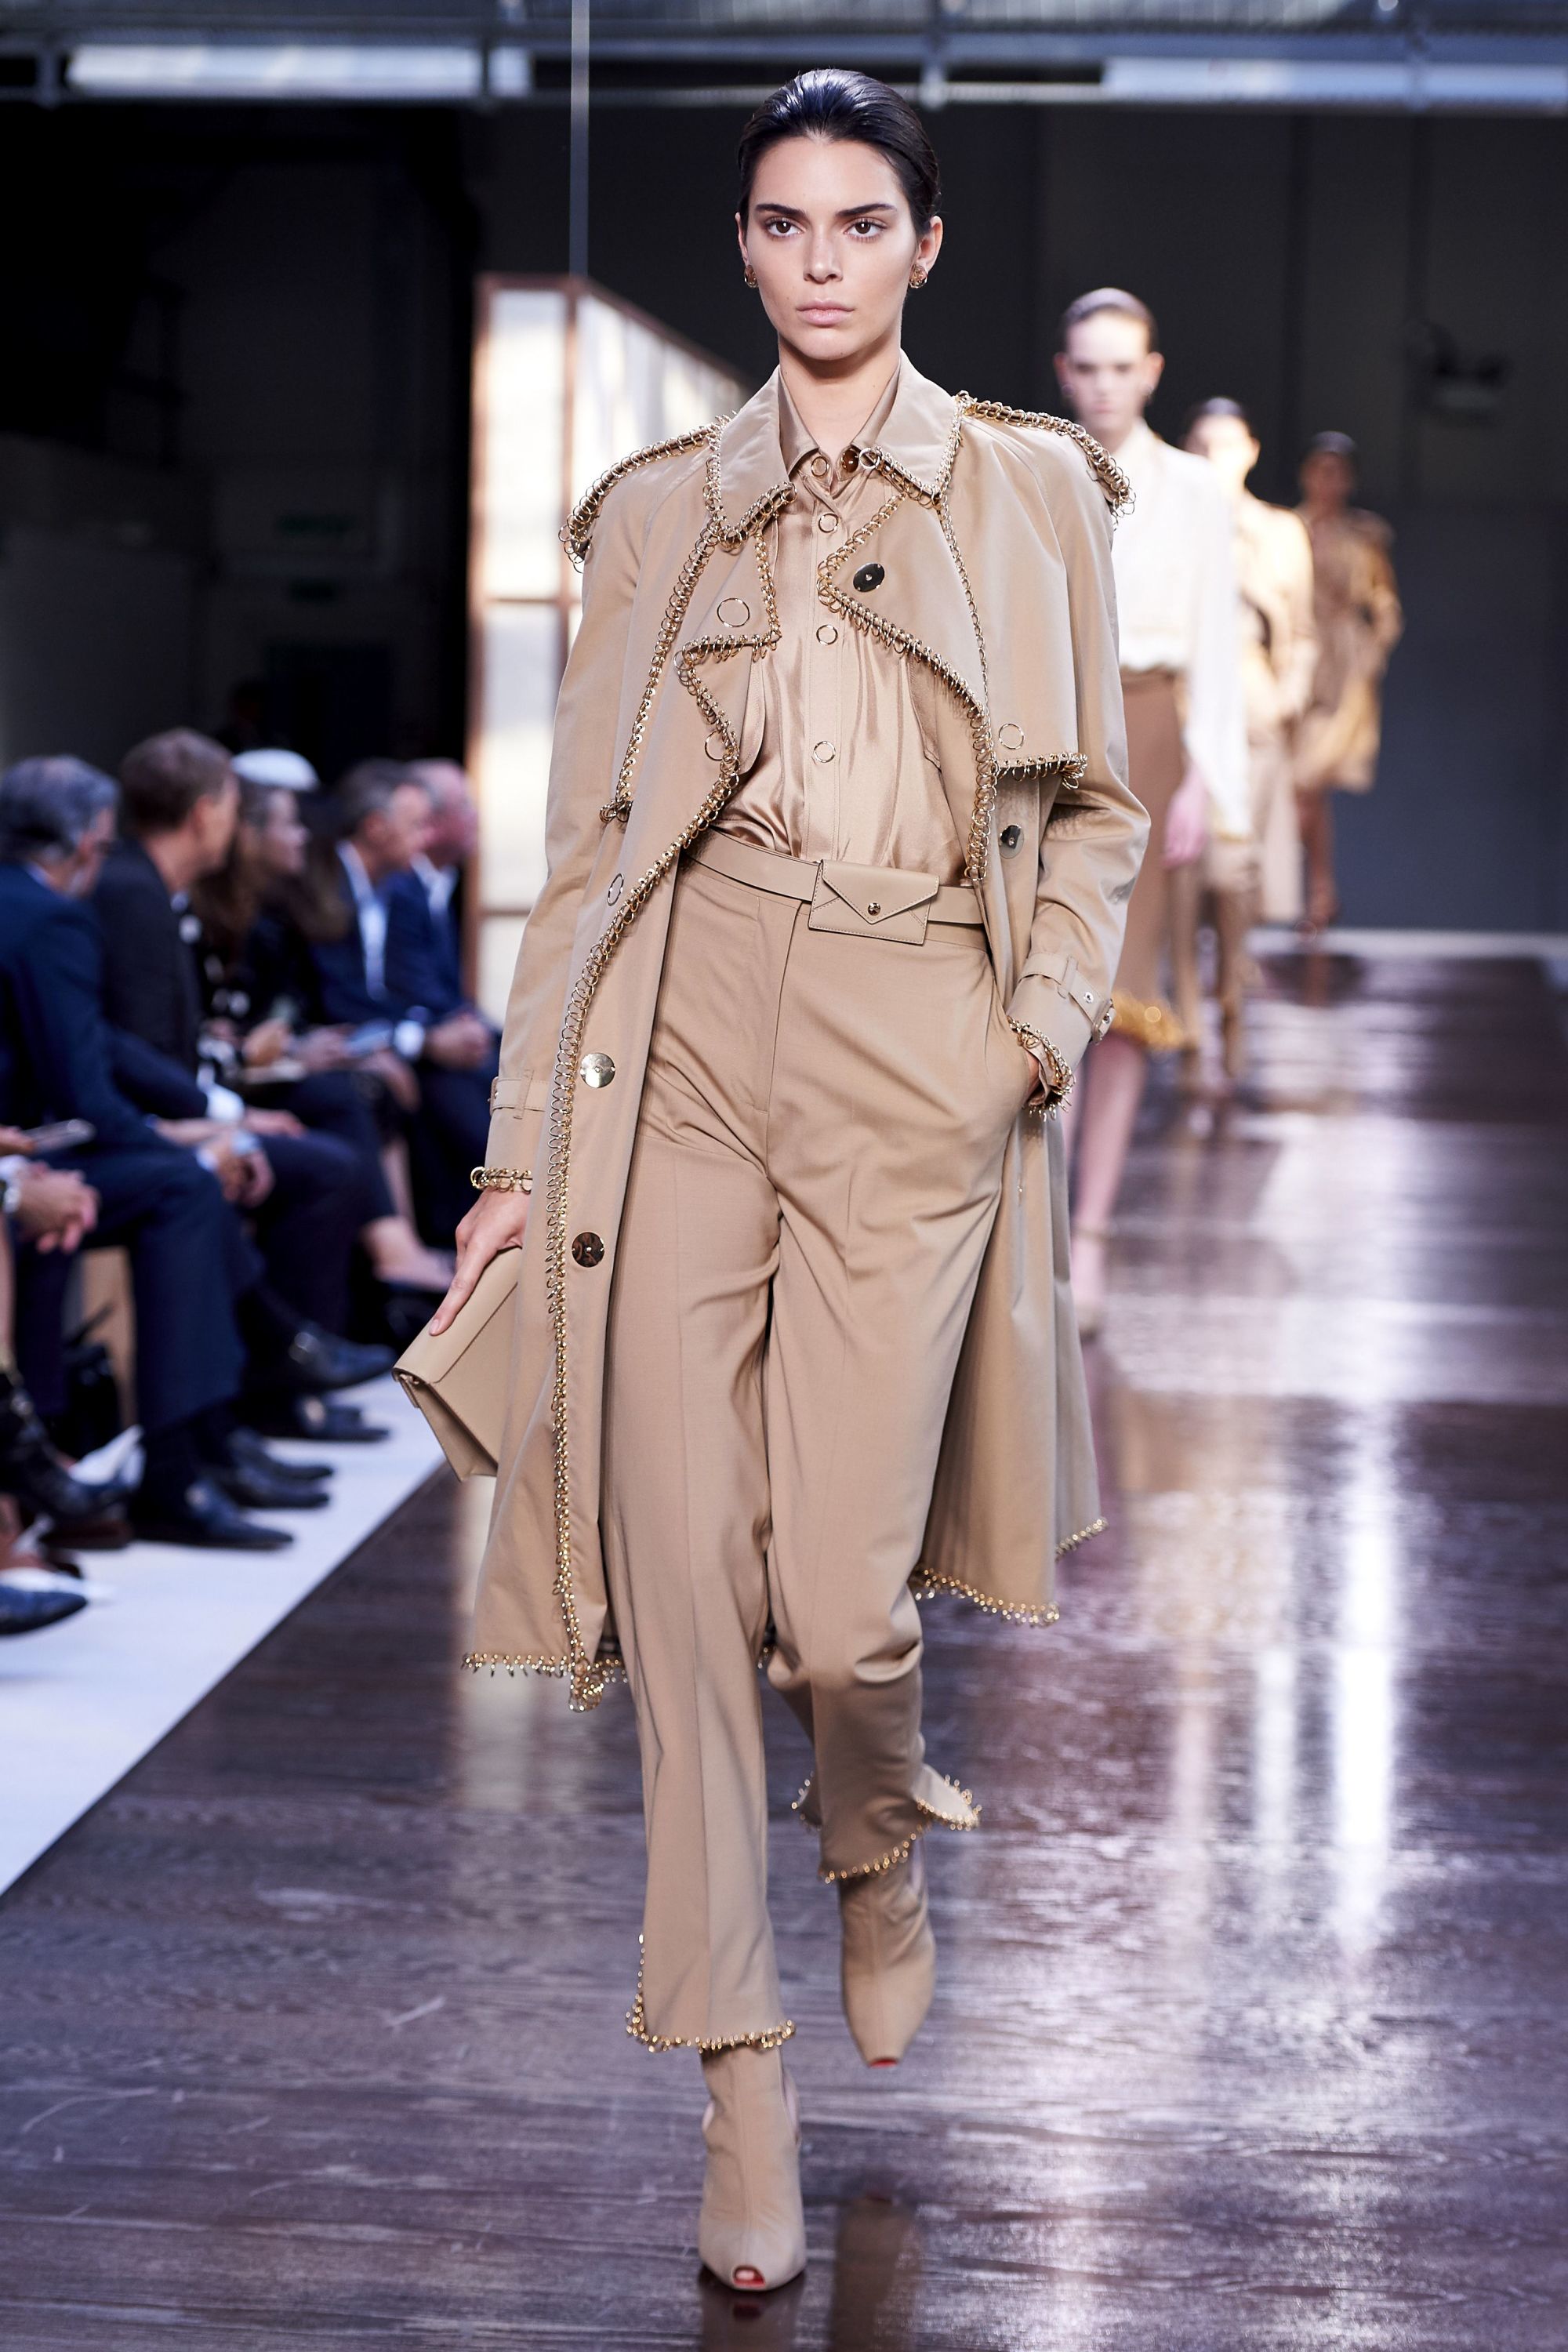 Stella McCartney, Burberry among fashion brands uniting against